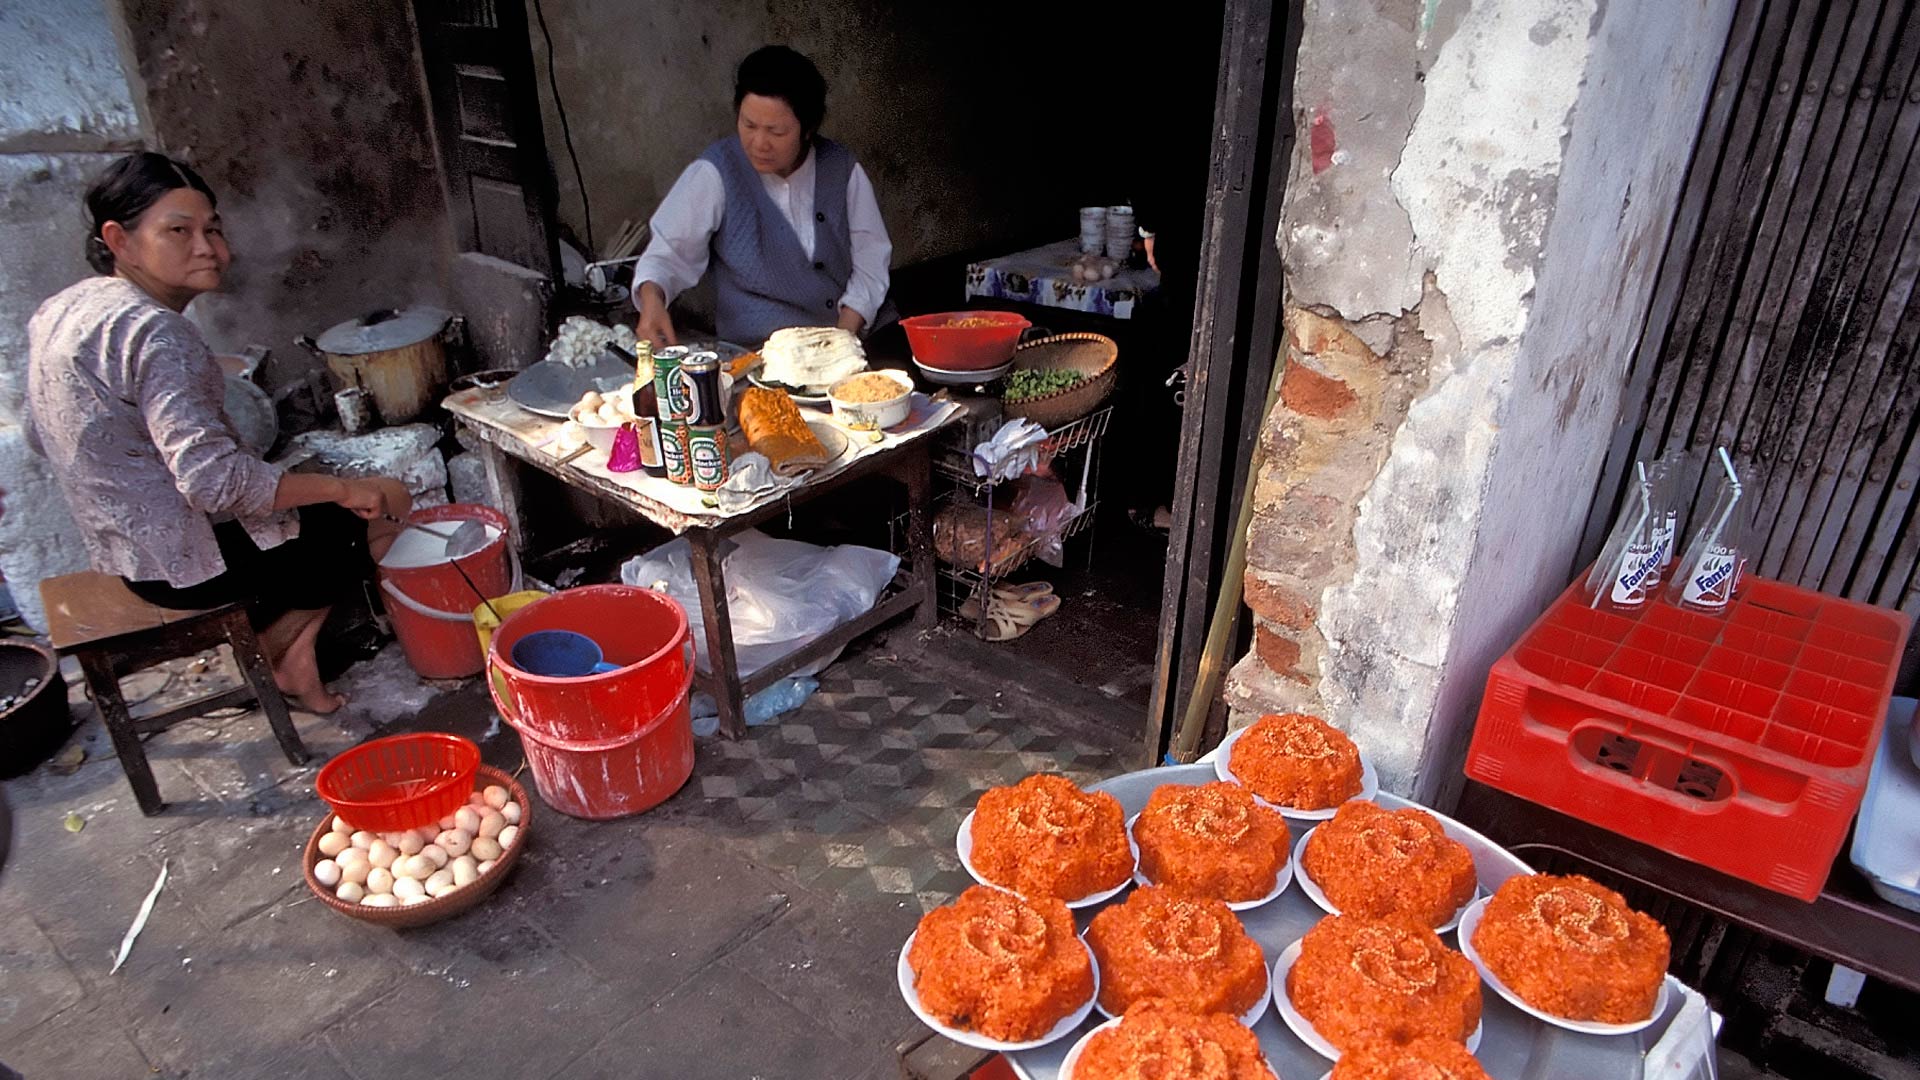 Food vendors on a street, Vietnam